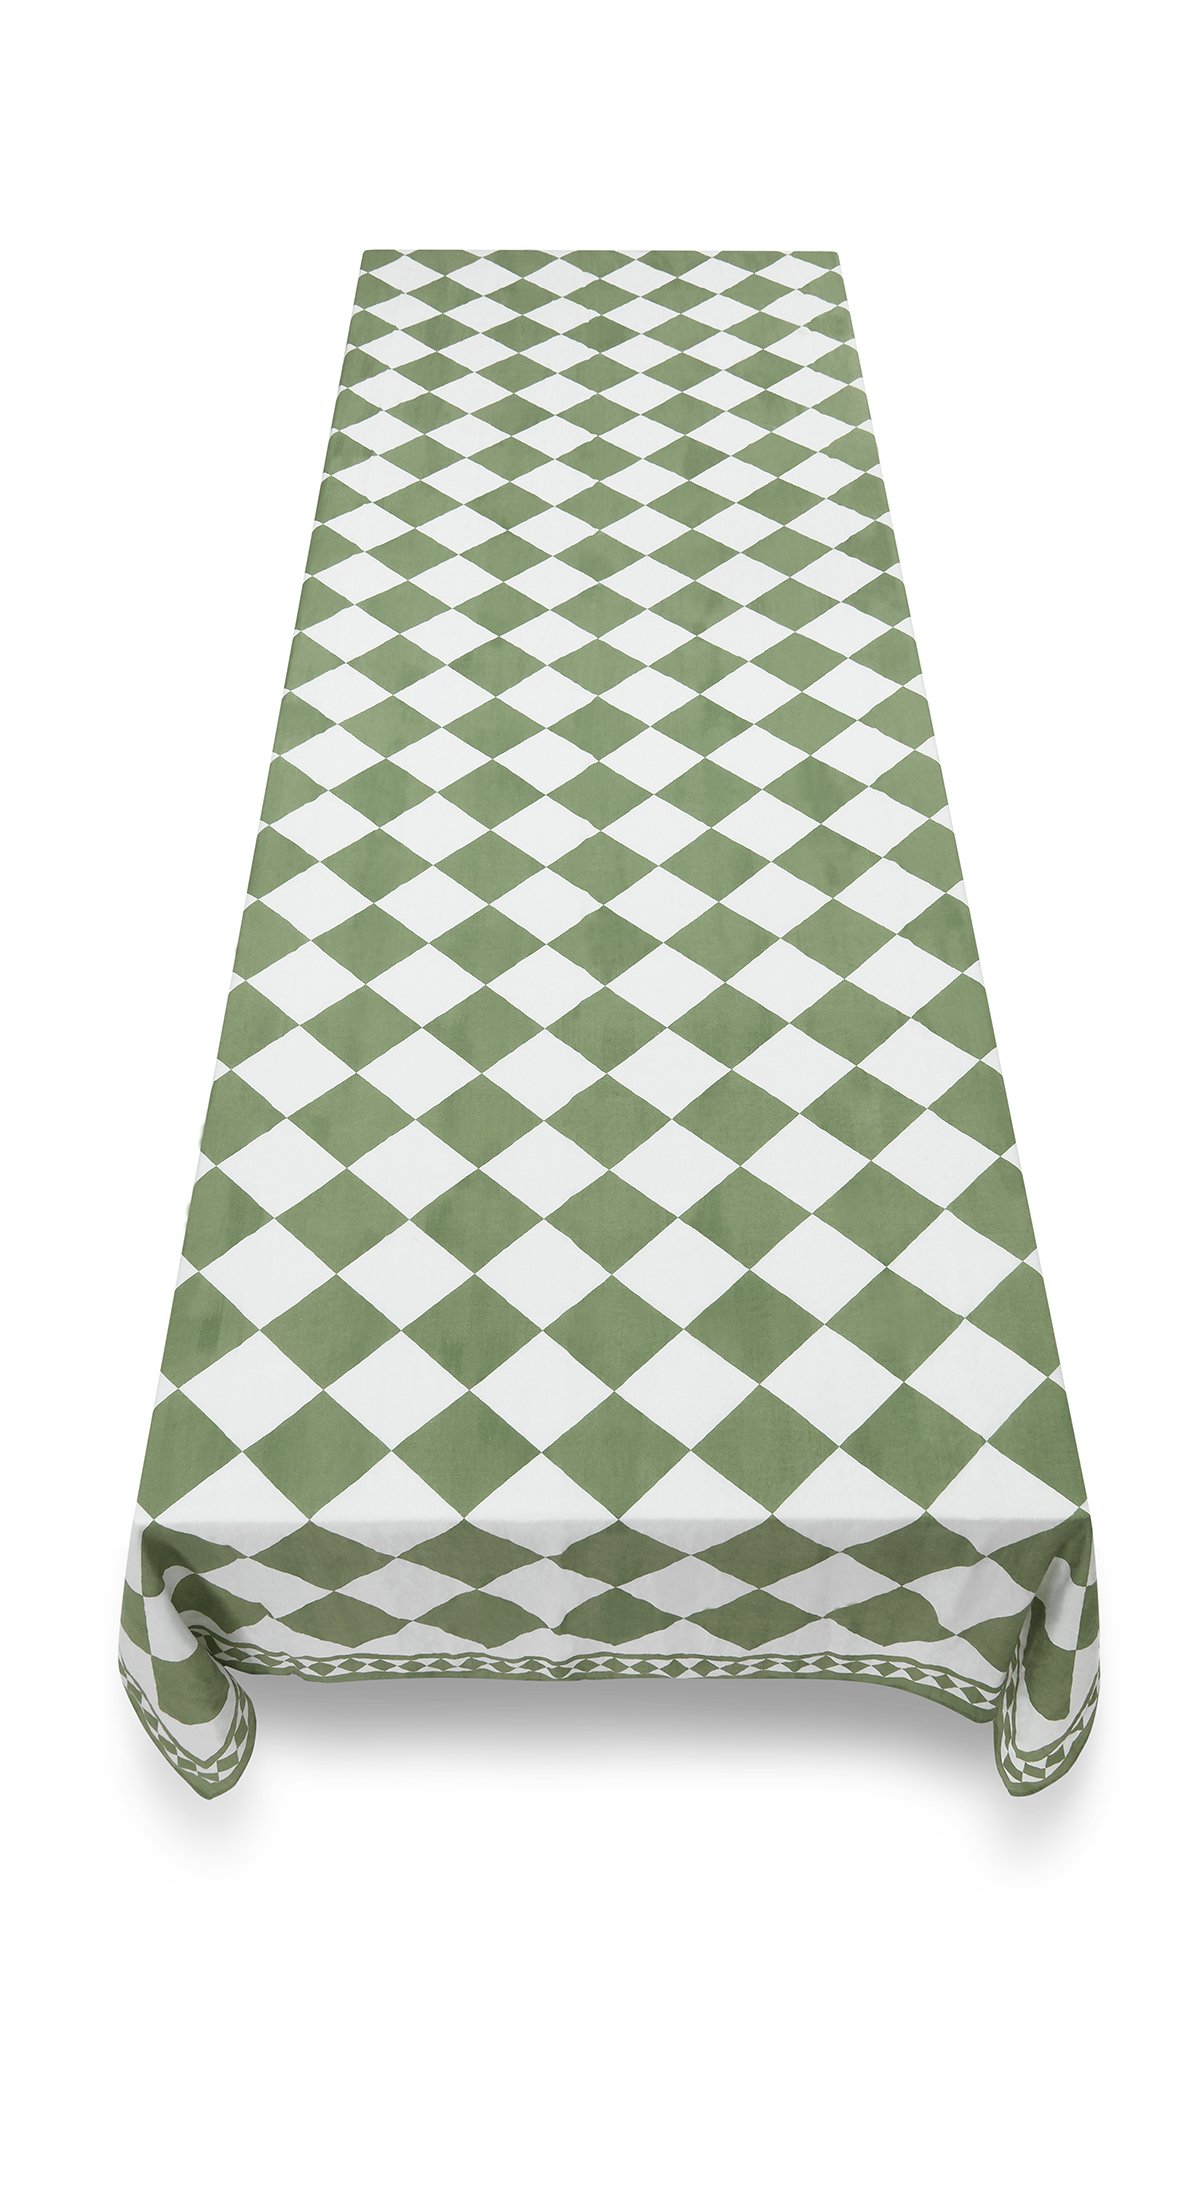 The Wick - ‘Green Check’ Summerill & Bishop X Claridge’s linen tablecloth